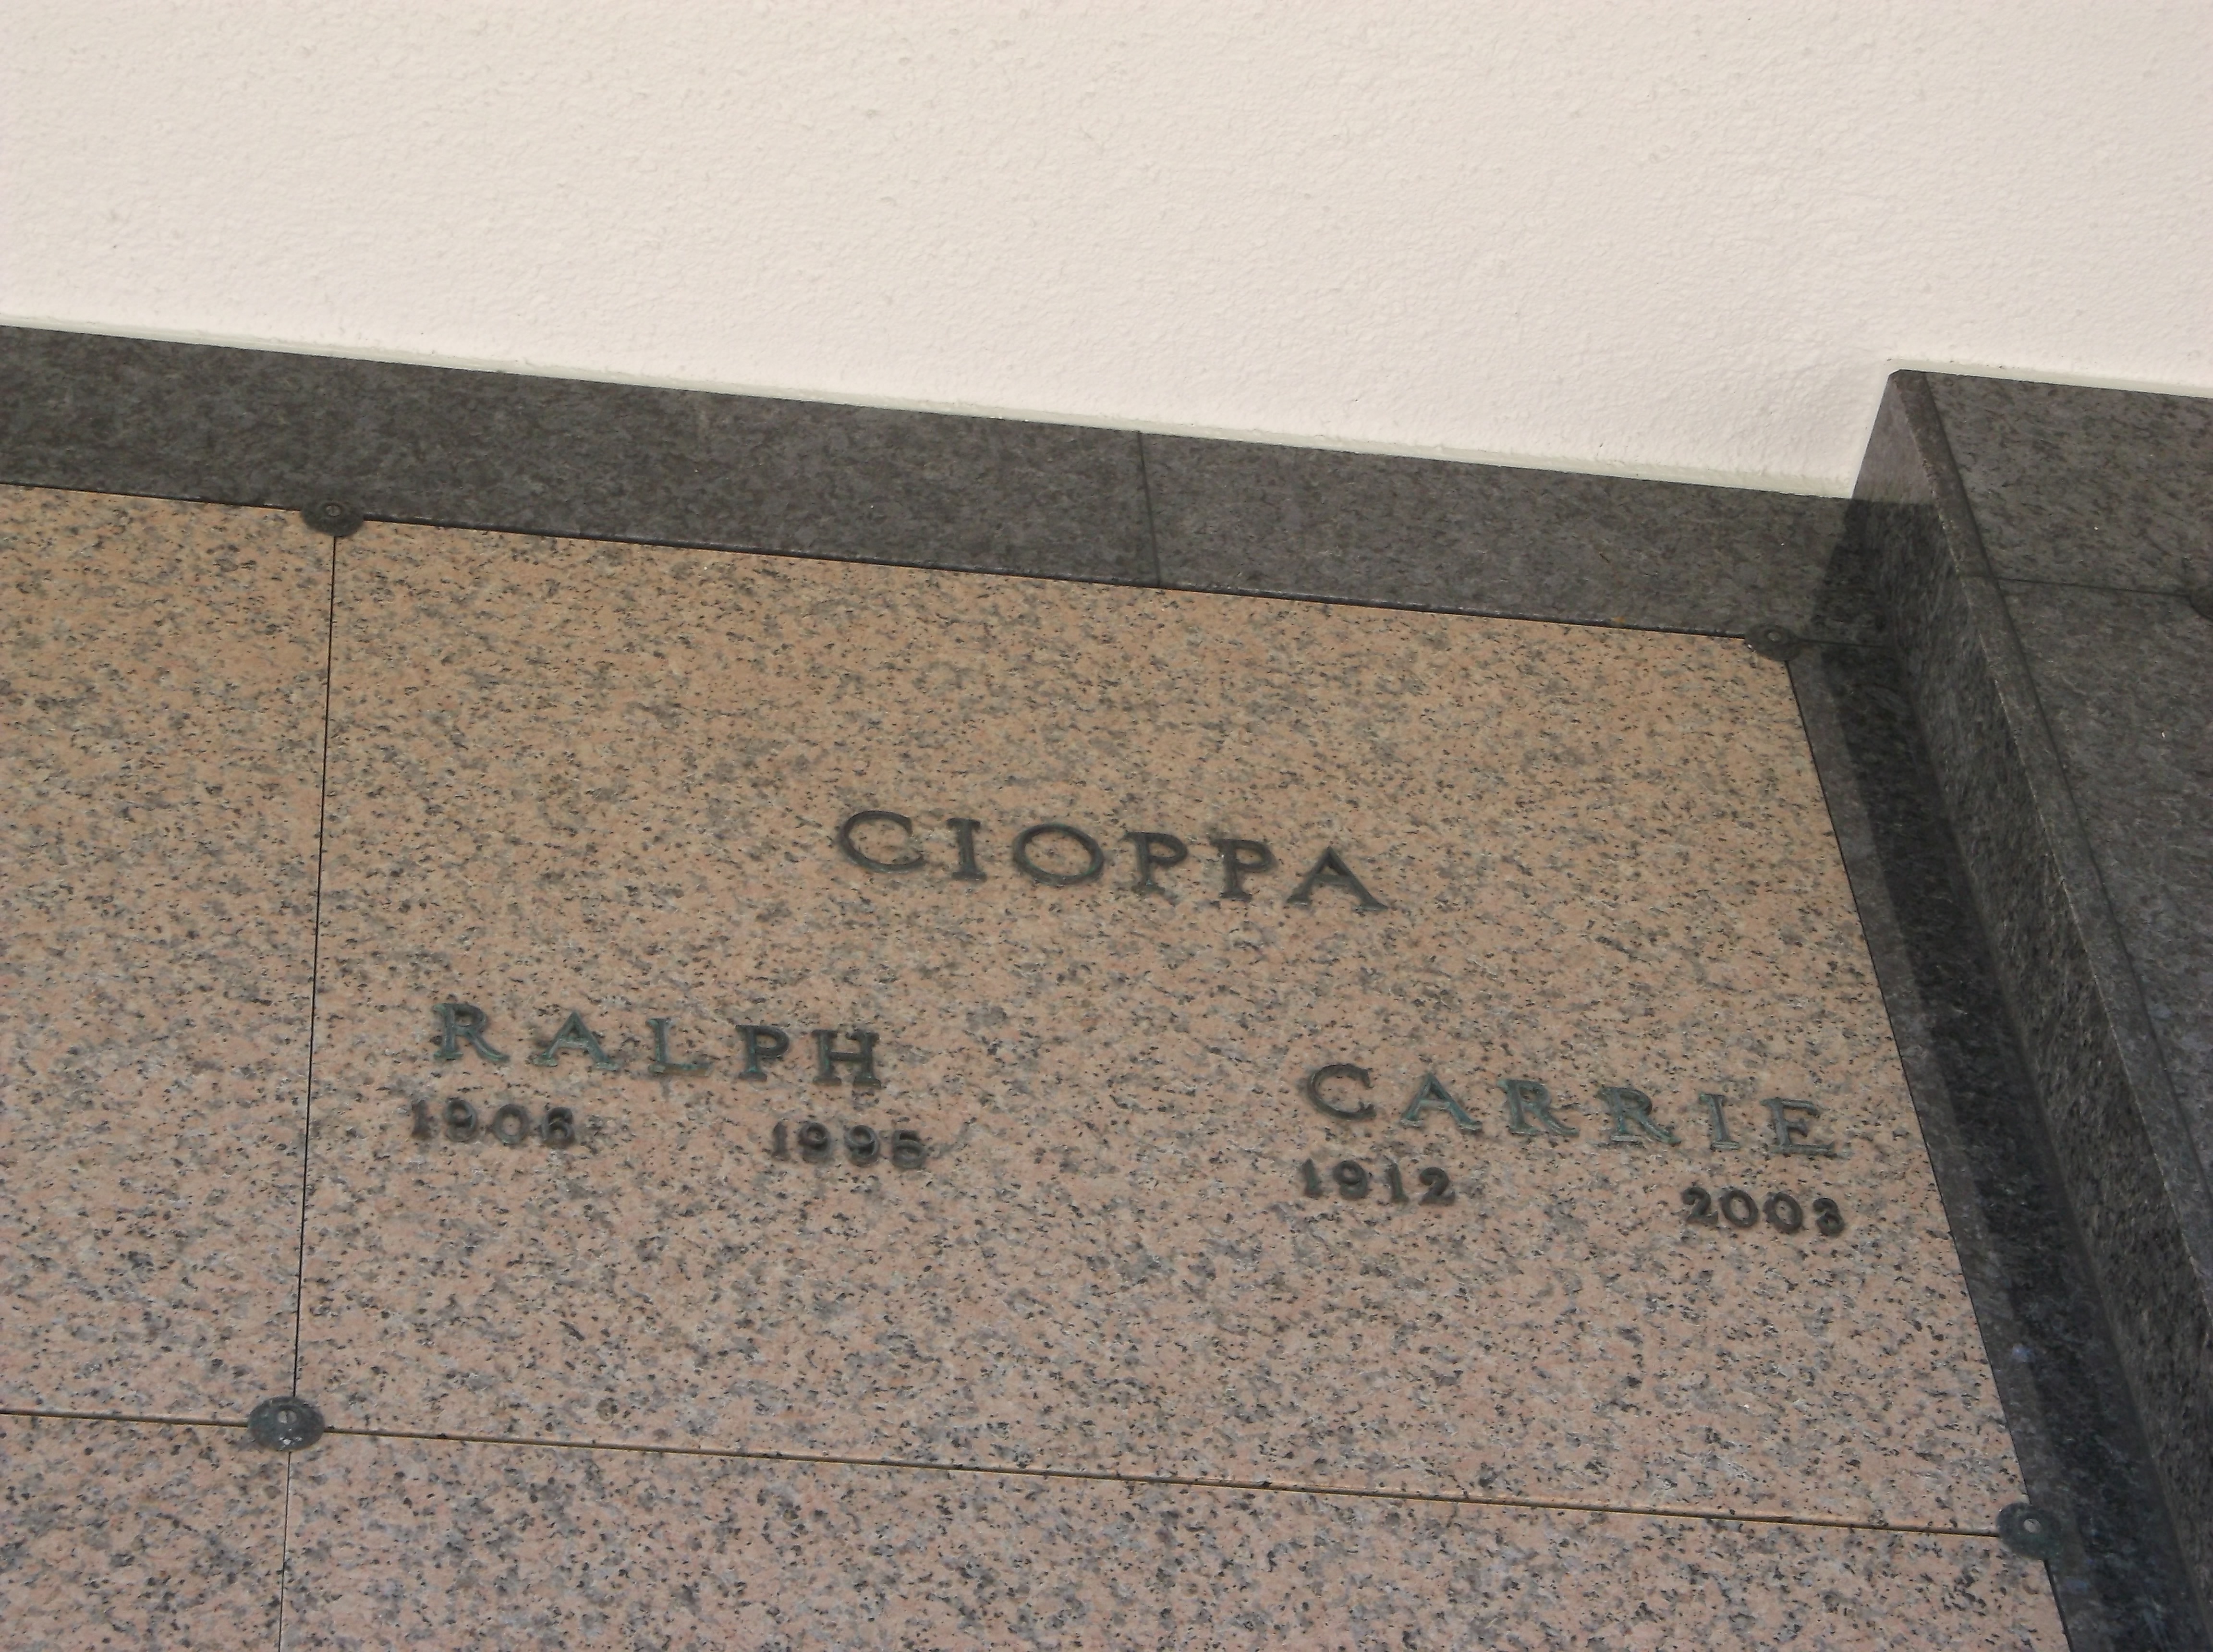 Ralph Cioppa